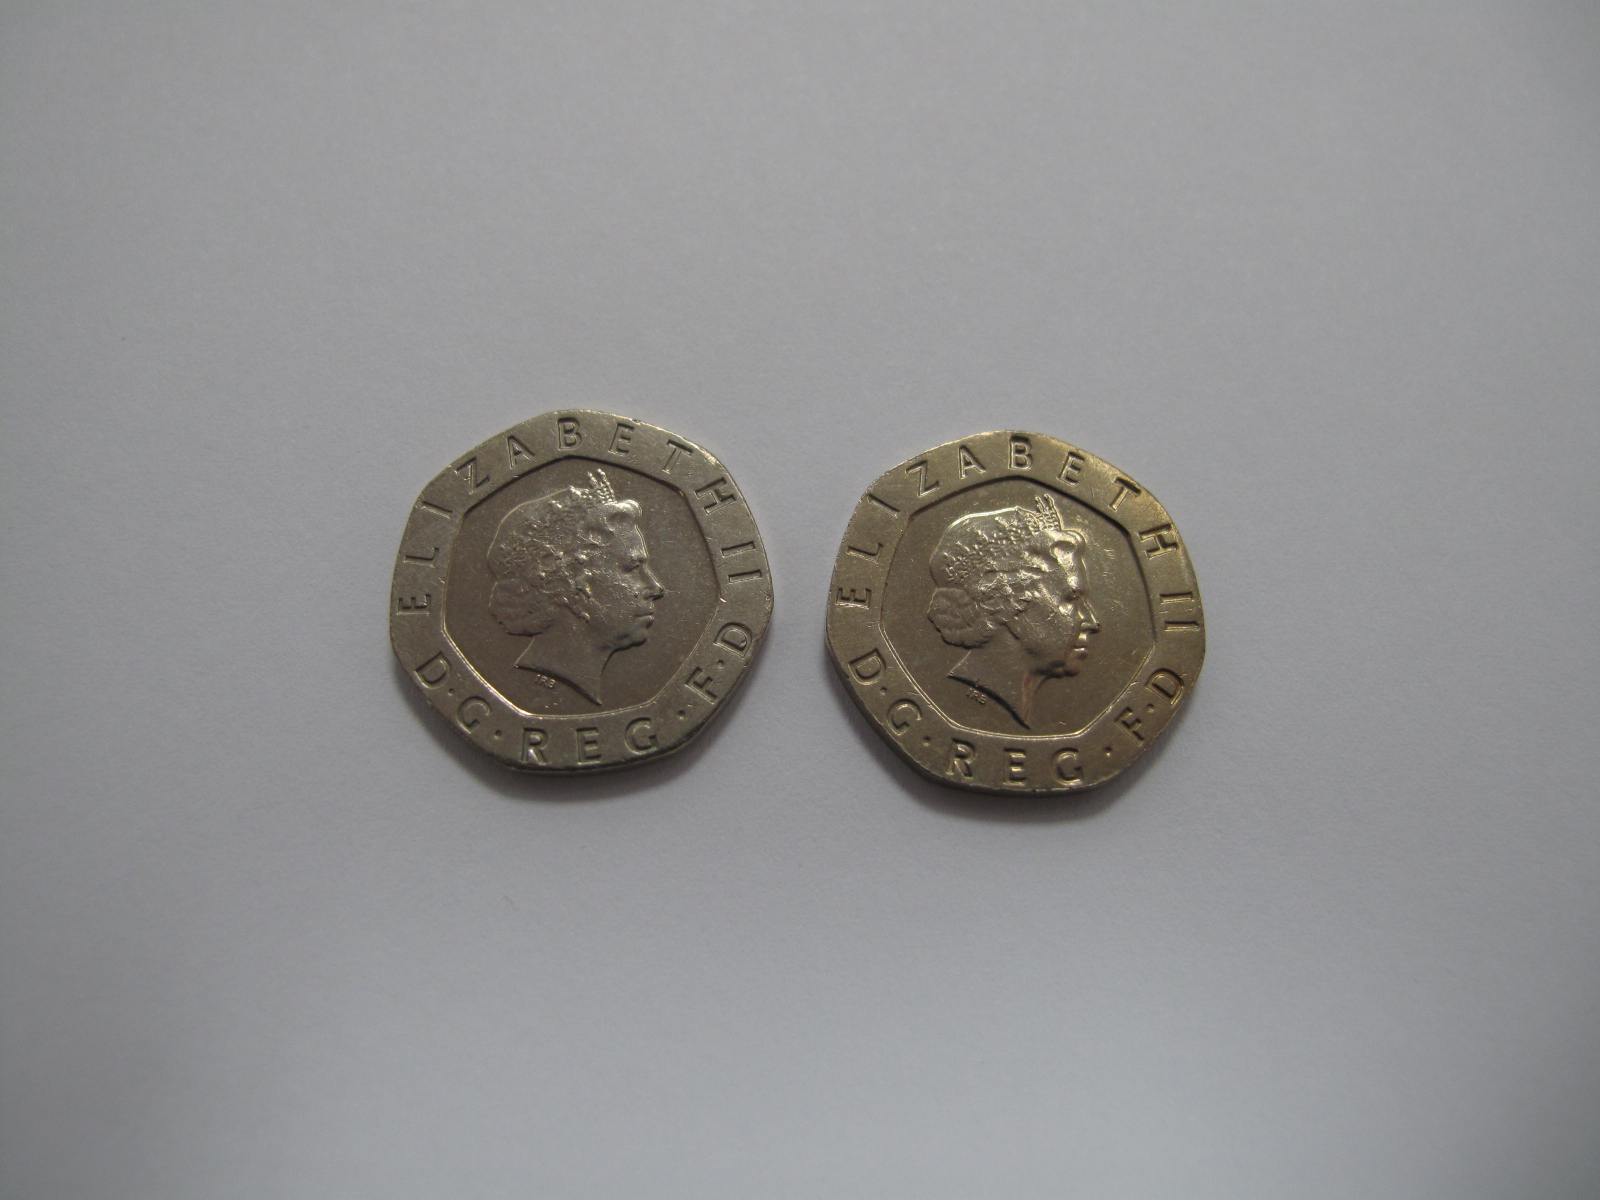 *WITHDRAWN* Two 'Undated' Twenty Pence Coins (Issued in 2008), Elizabeth II D.G. Reg FD.